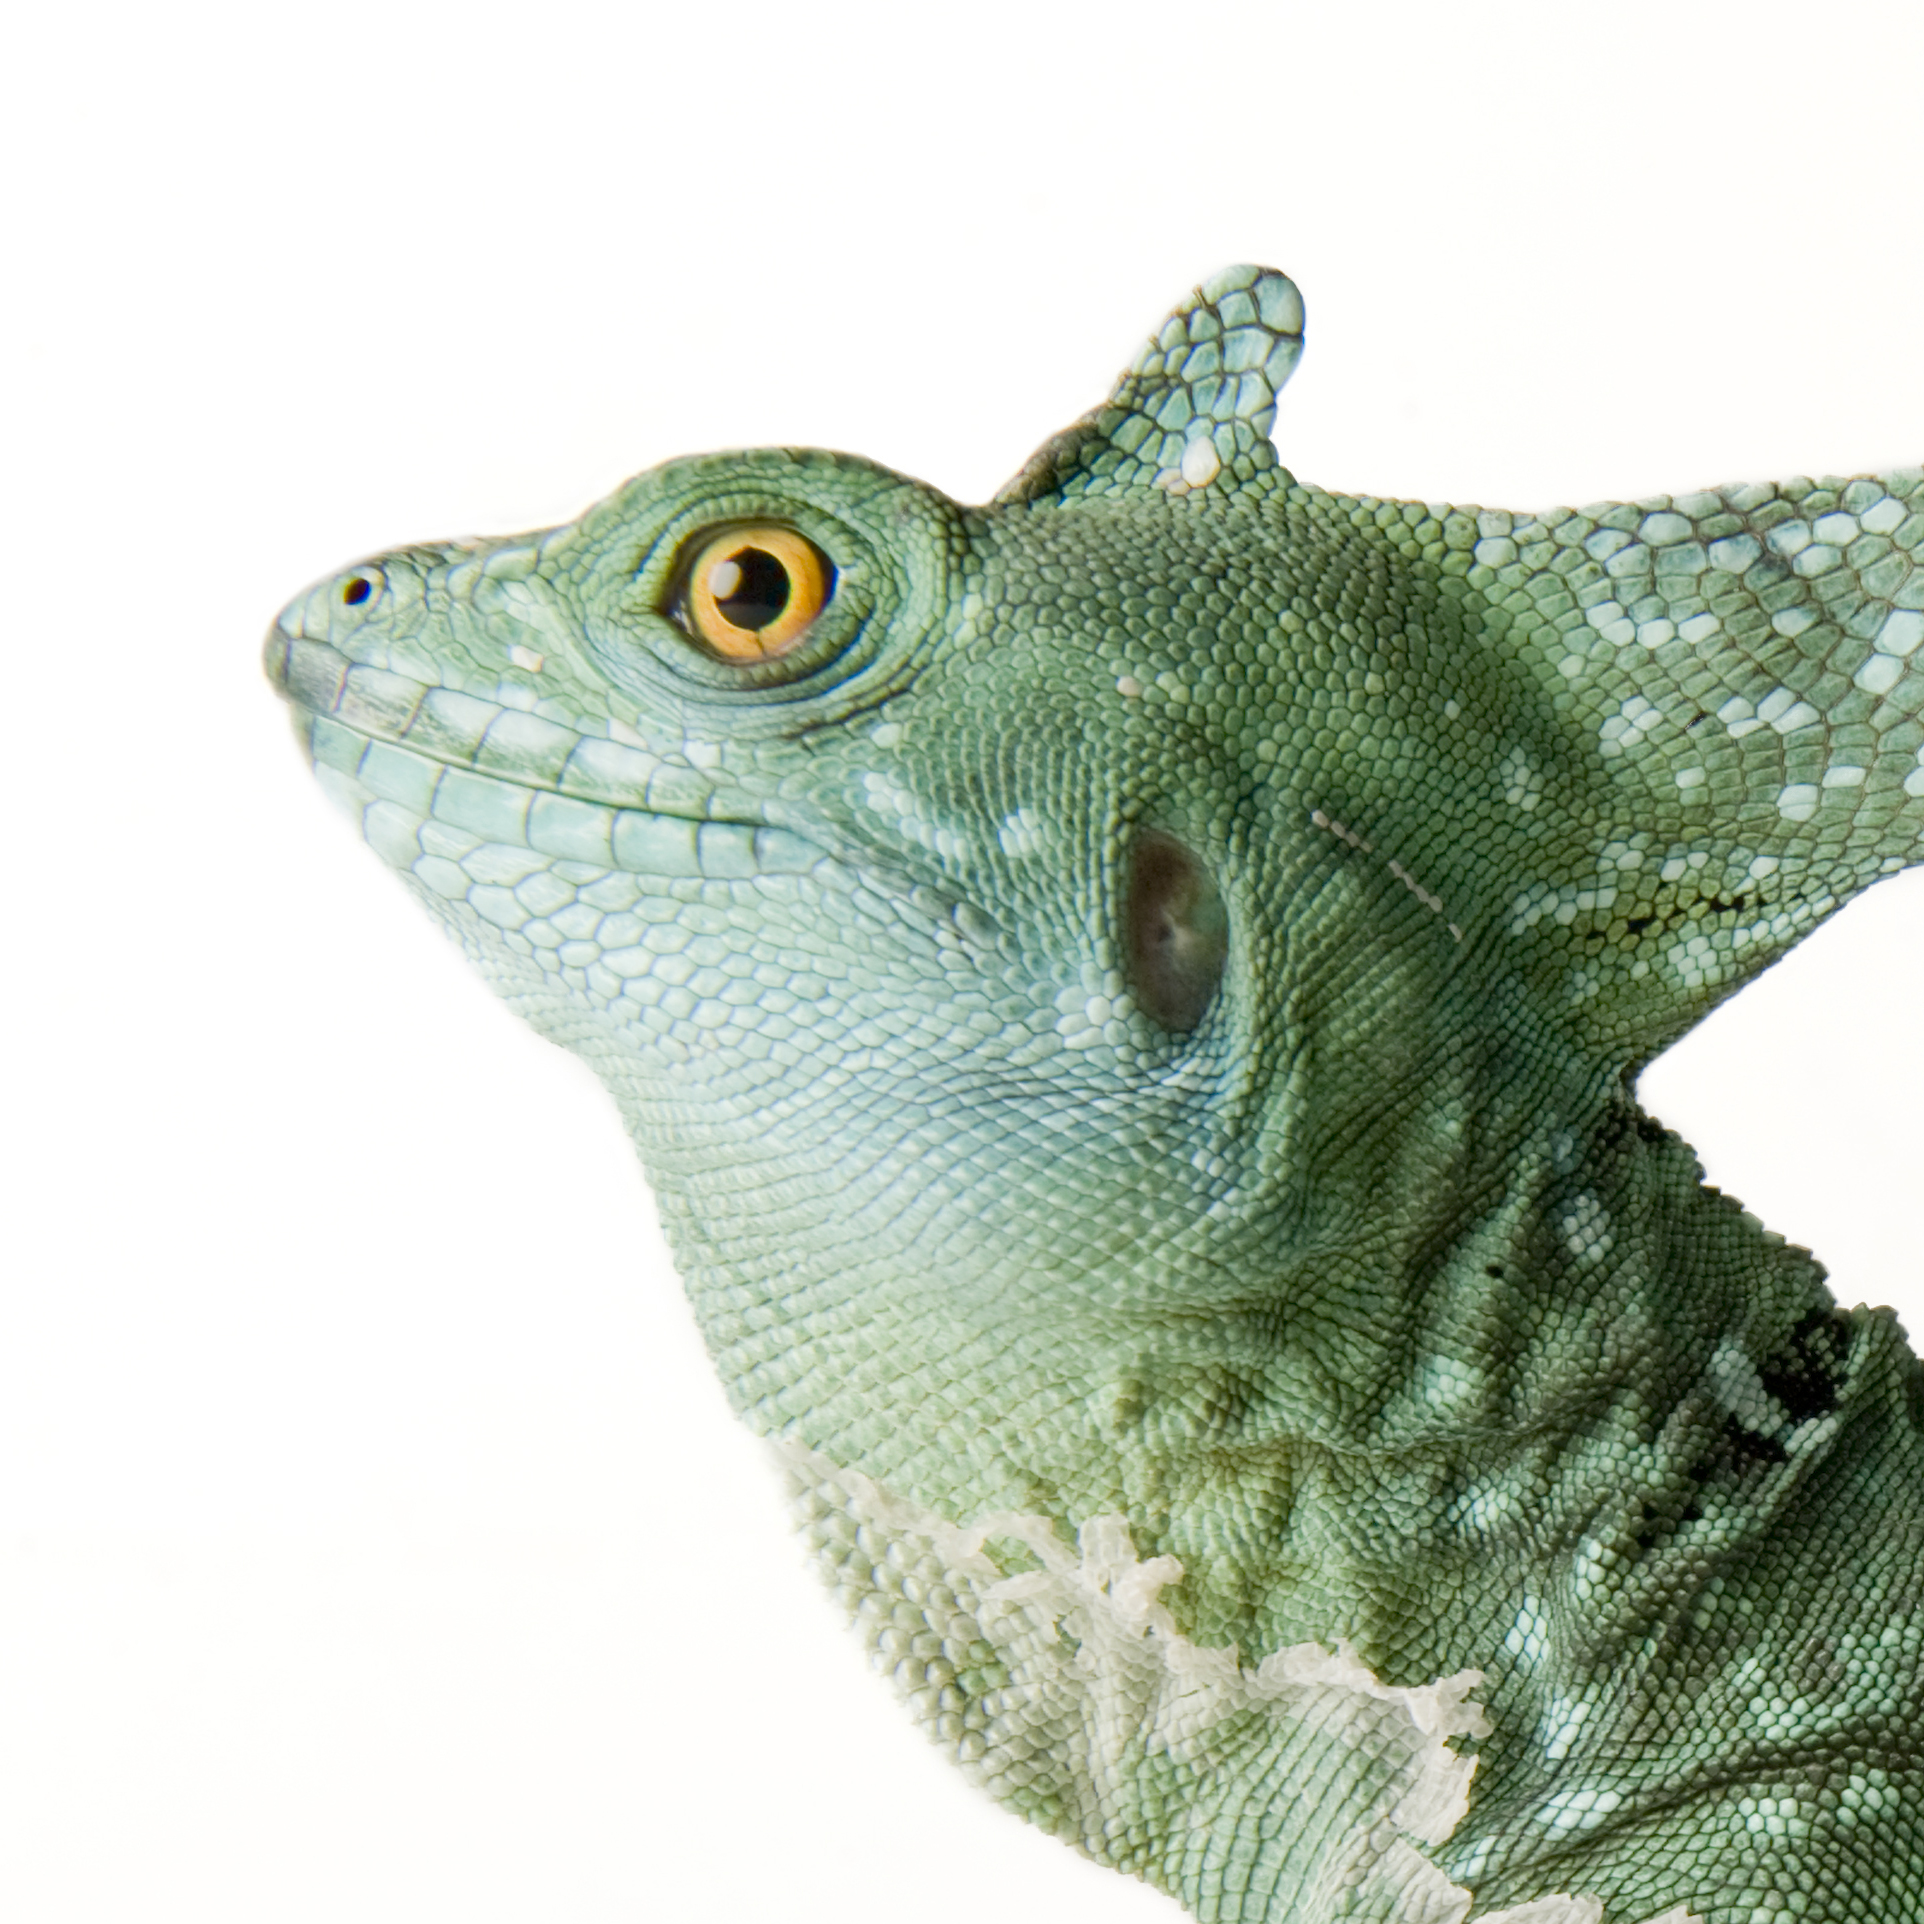 Green Basilisk Lizard | National Geographic